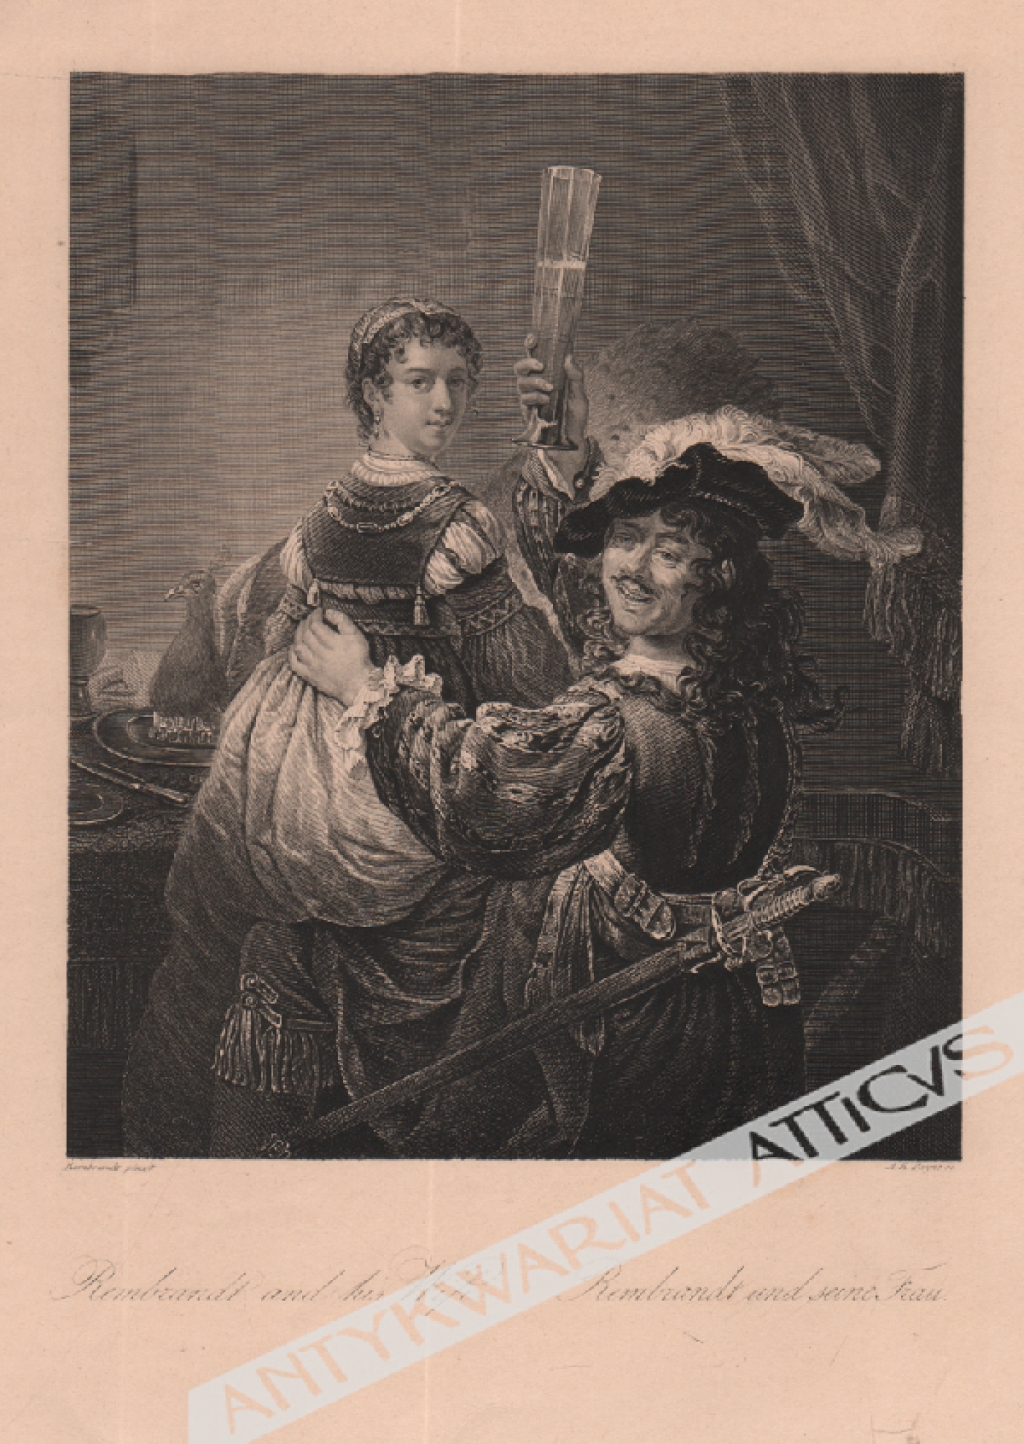 [rycina, ok. 1860] [Rembrandt i jego żona Saskia] Rembrandt and his Wife. Rembrandt und seine Frau